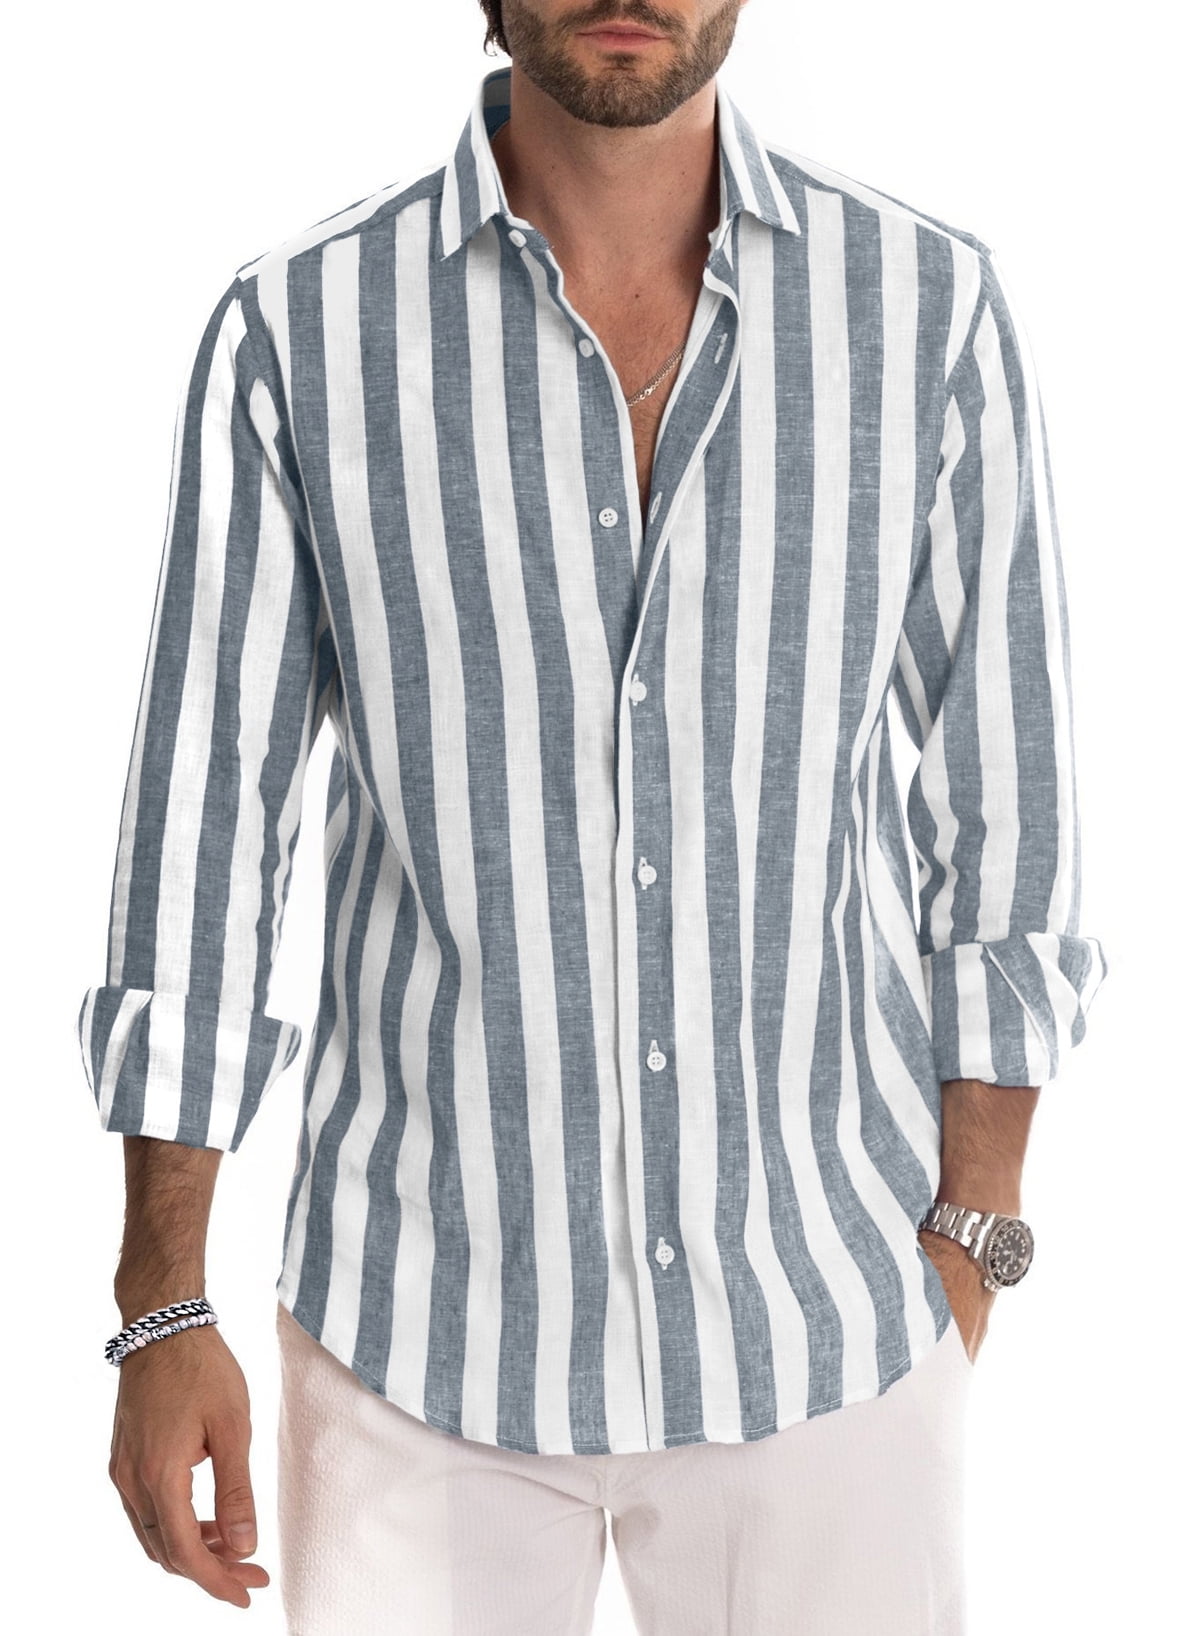 Chase Secret Men's Shirts Long Sleeve Button Down Striped Casual Linen ...